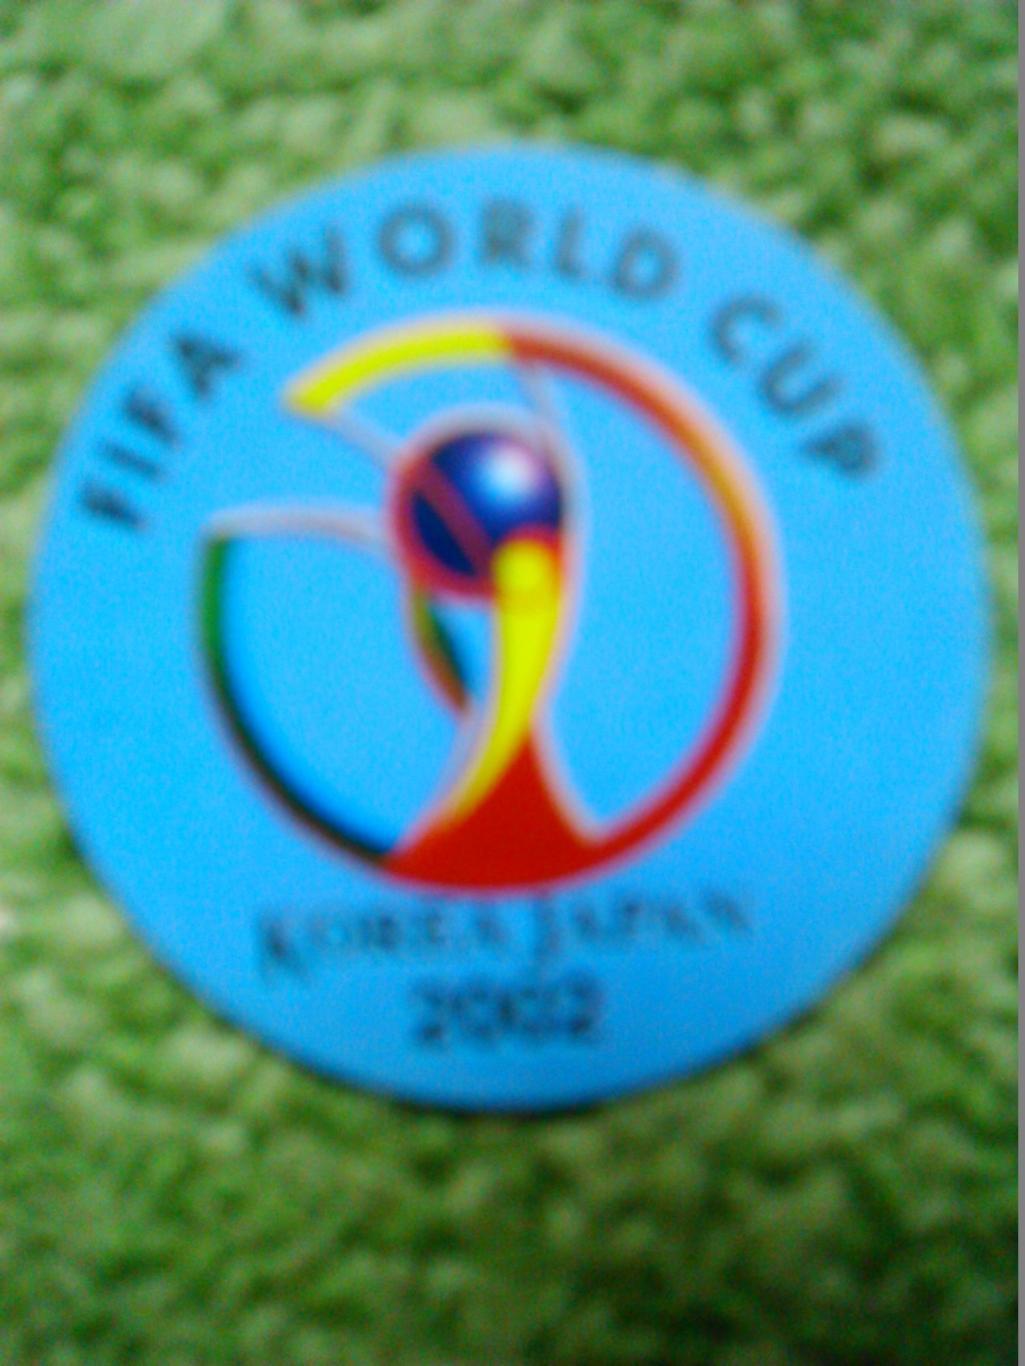 жетон J.MORENO Испания. FIFA WORLD CUP 2002. Оптом скидки до 45%! 1